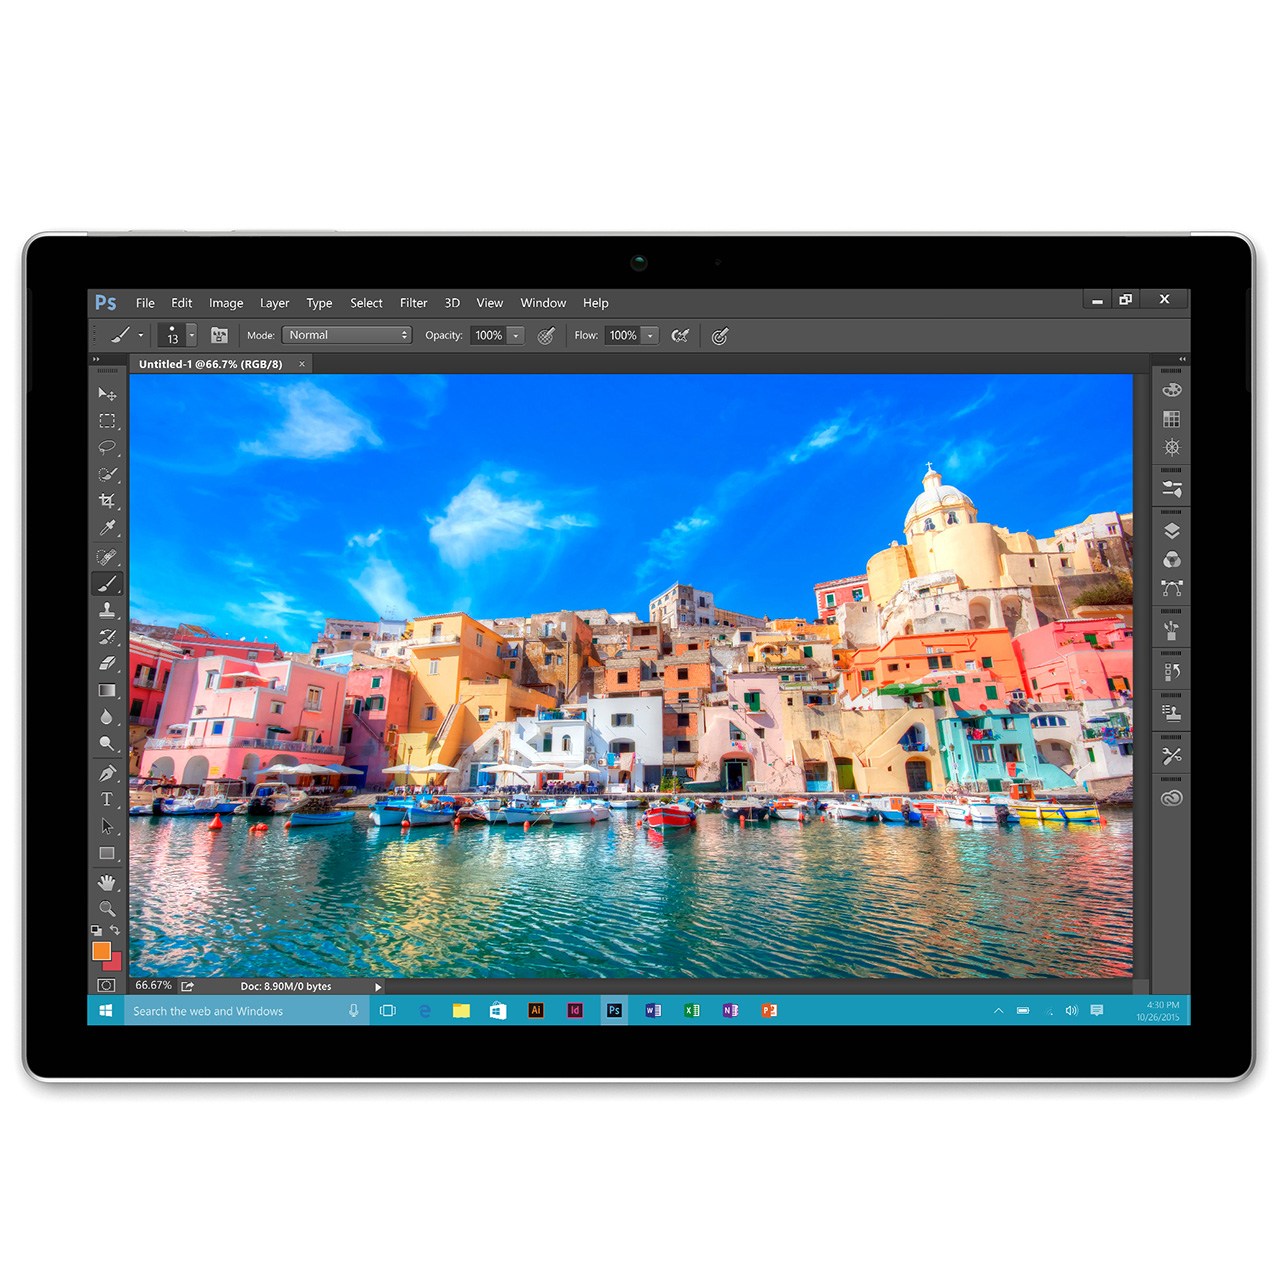 تبلت مایکروسافت مدل Surface Pro 4 - B